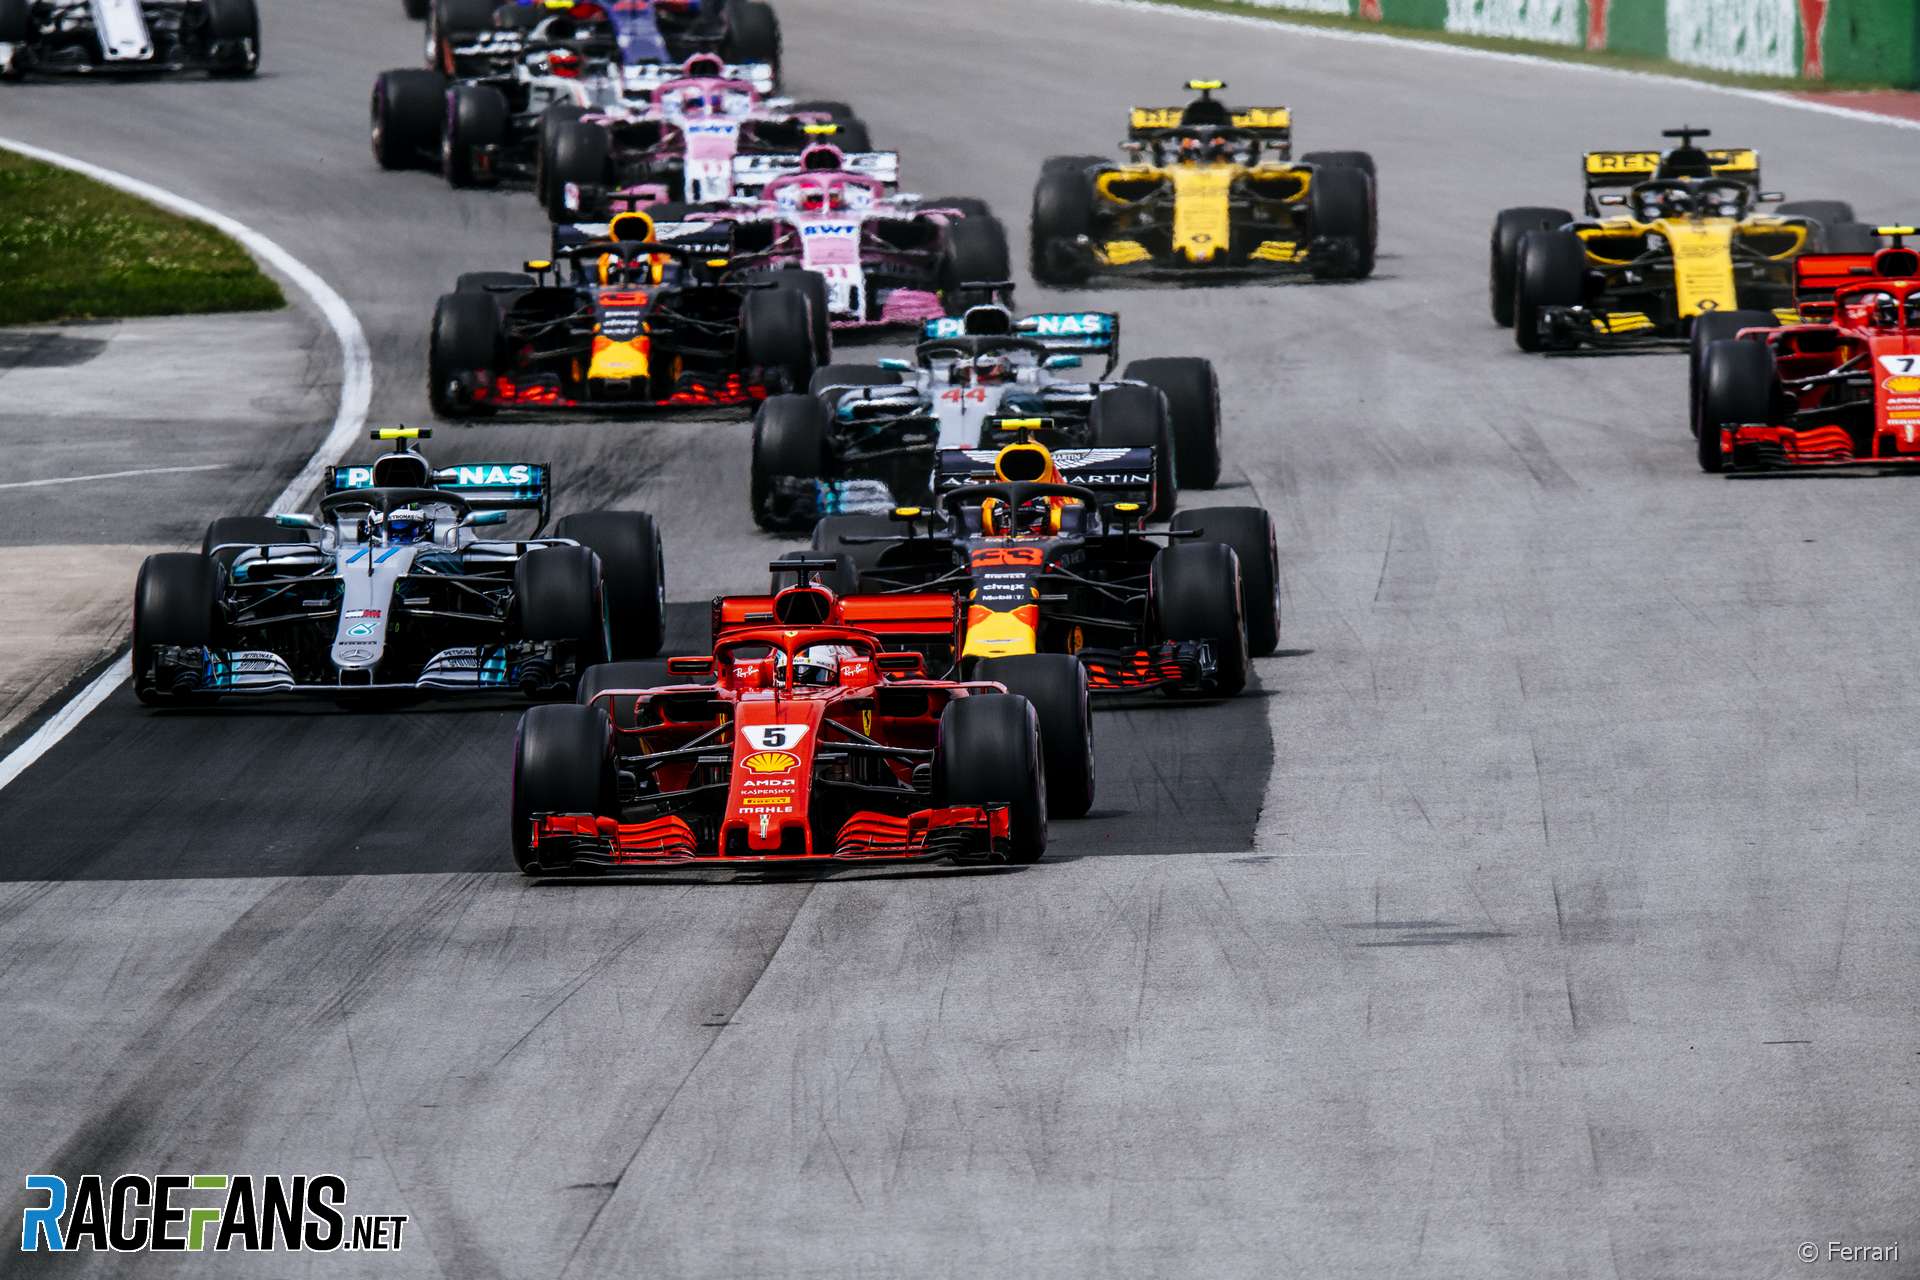 Start, Circuit Gilles Villeneuve, 2018